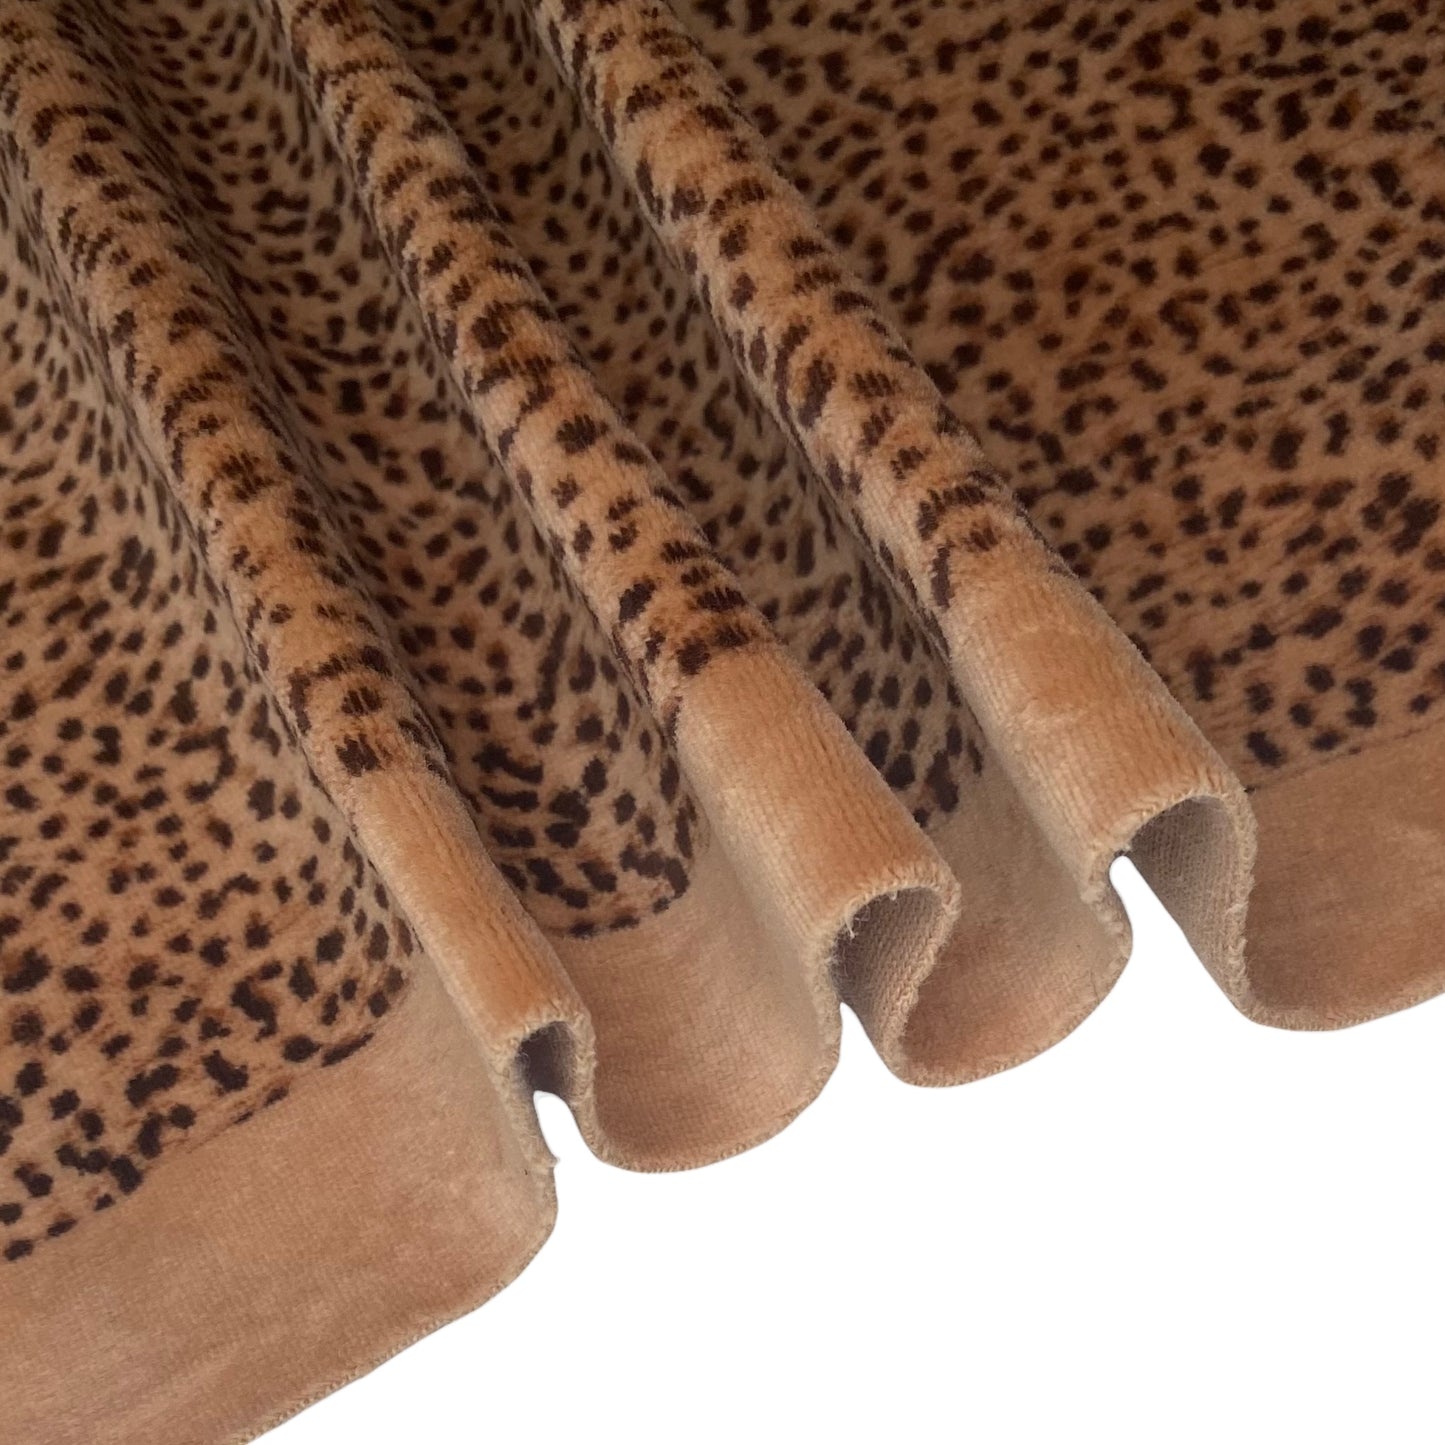 Printed Stretch Velvet - Cheetah